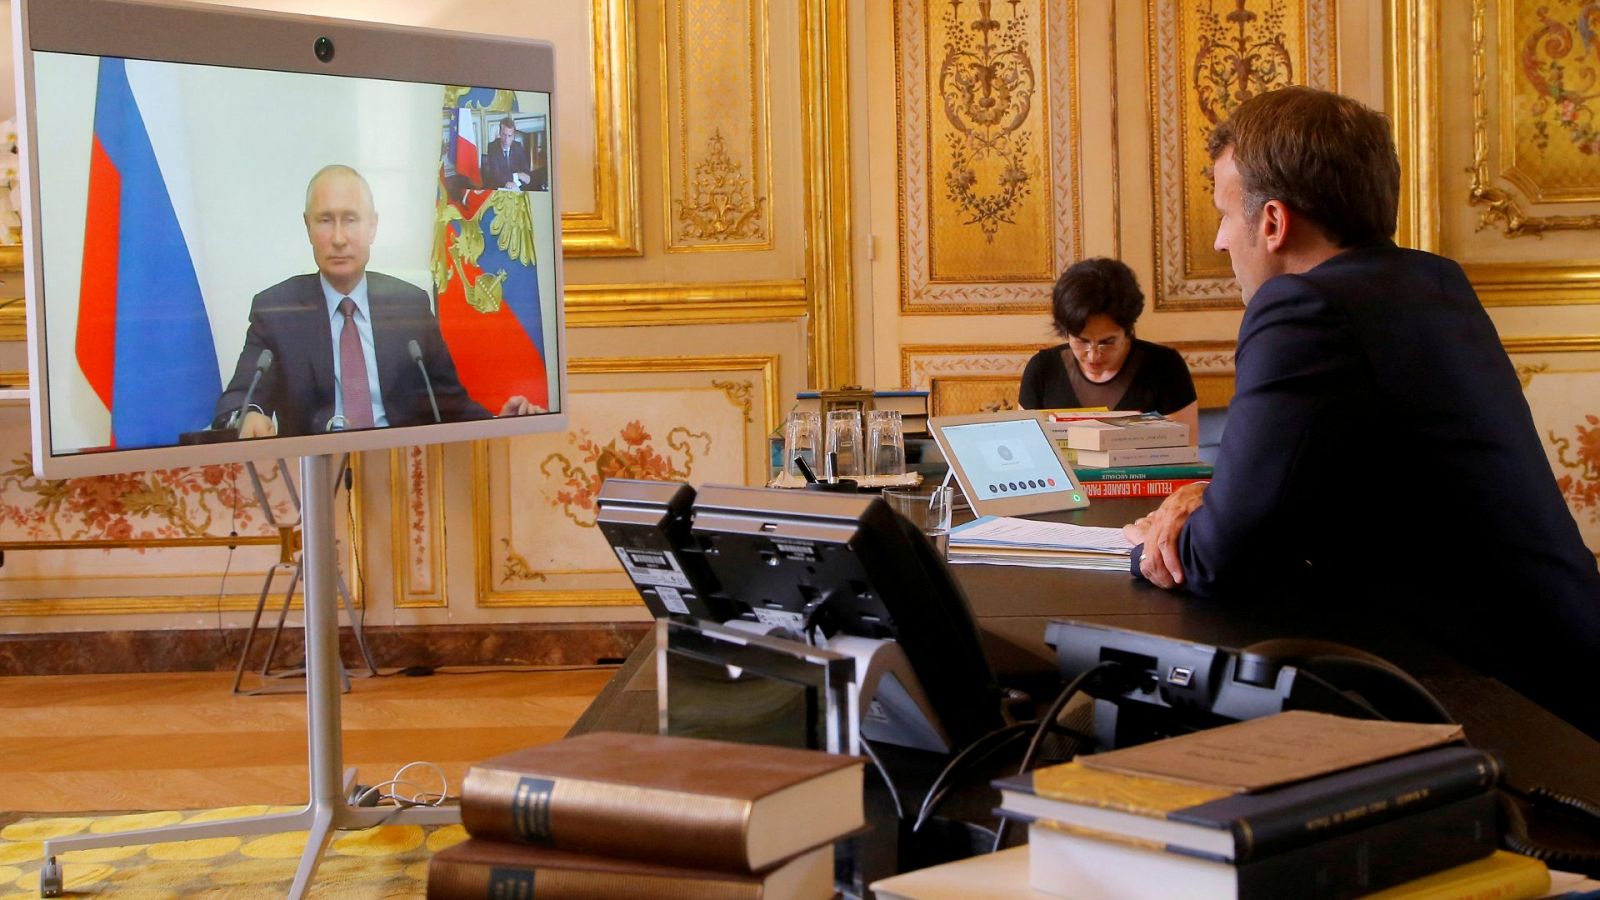 Crisis Ucrania: Macron y Putin hablan por teléfono